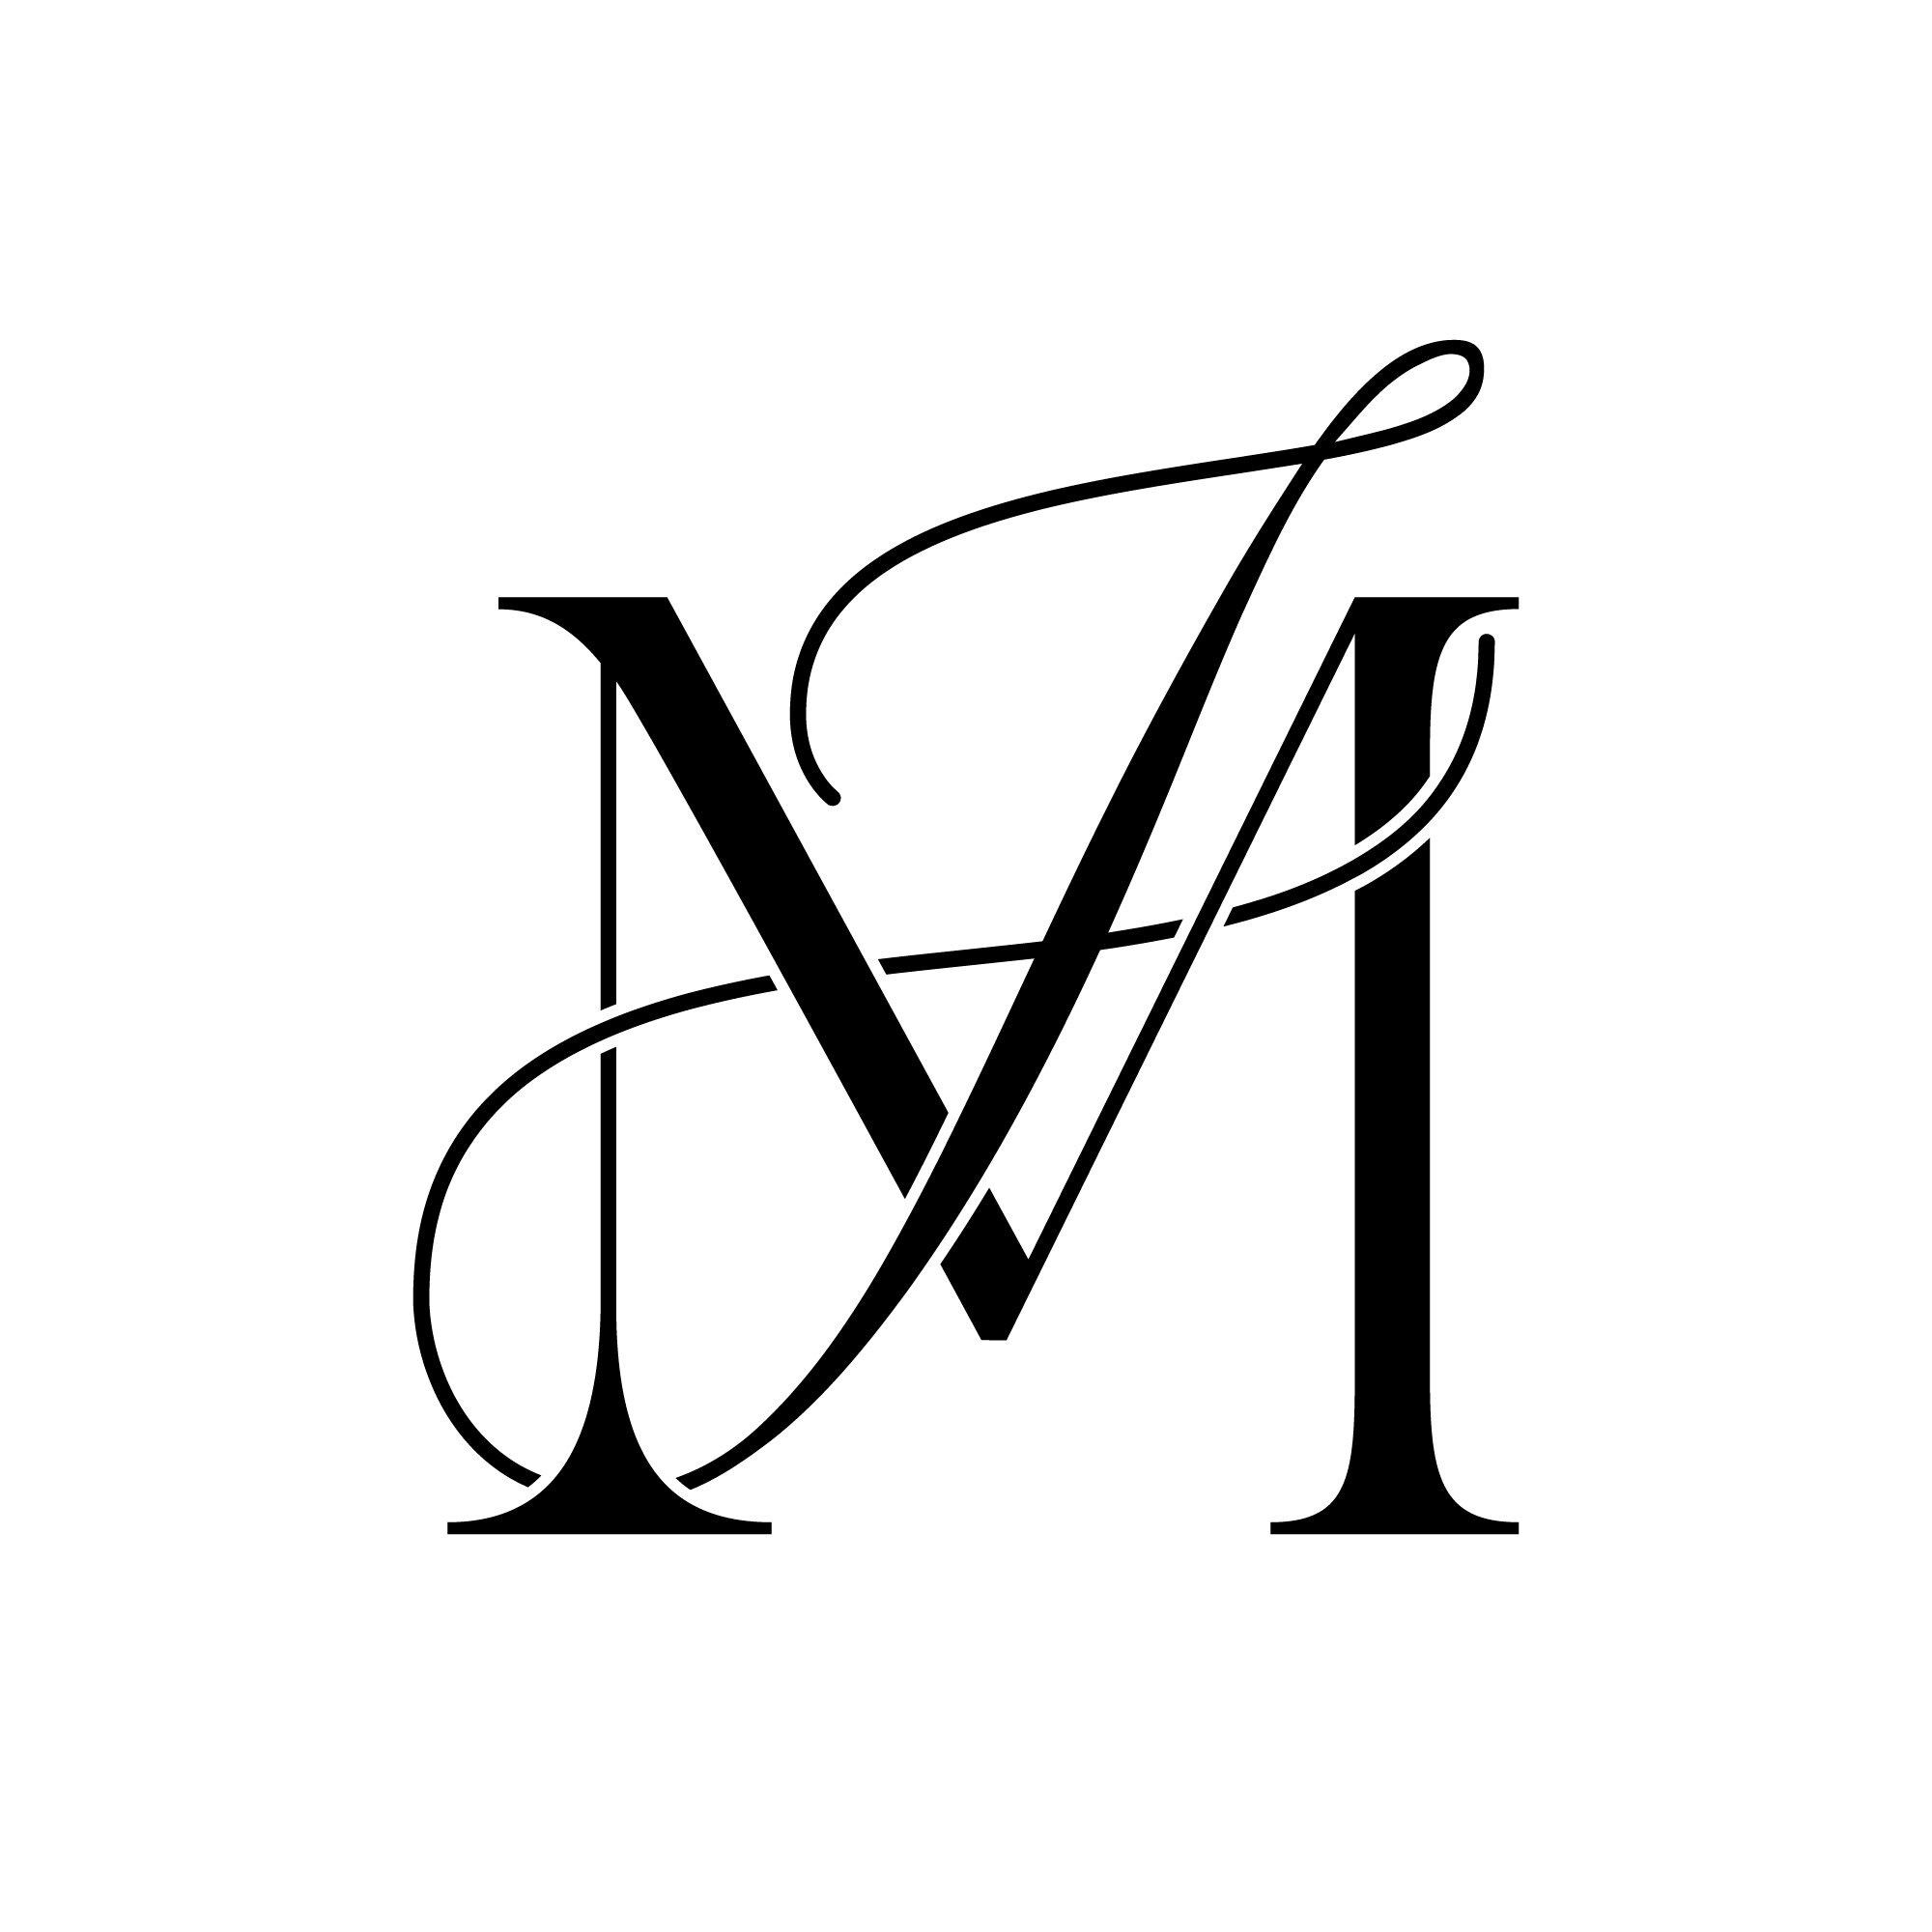 Monogram with Initials Tropical Wedding Logo Template